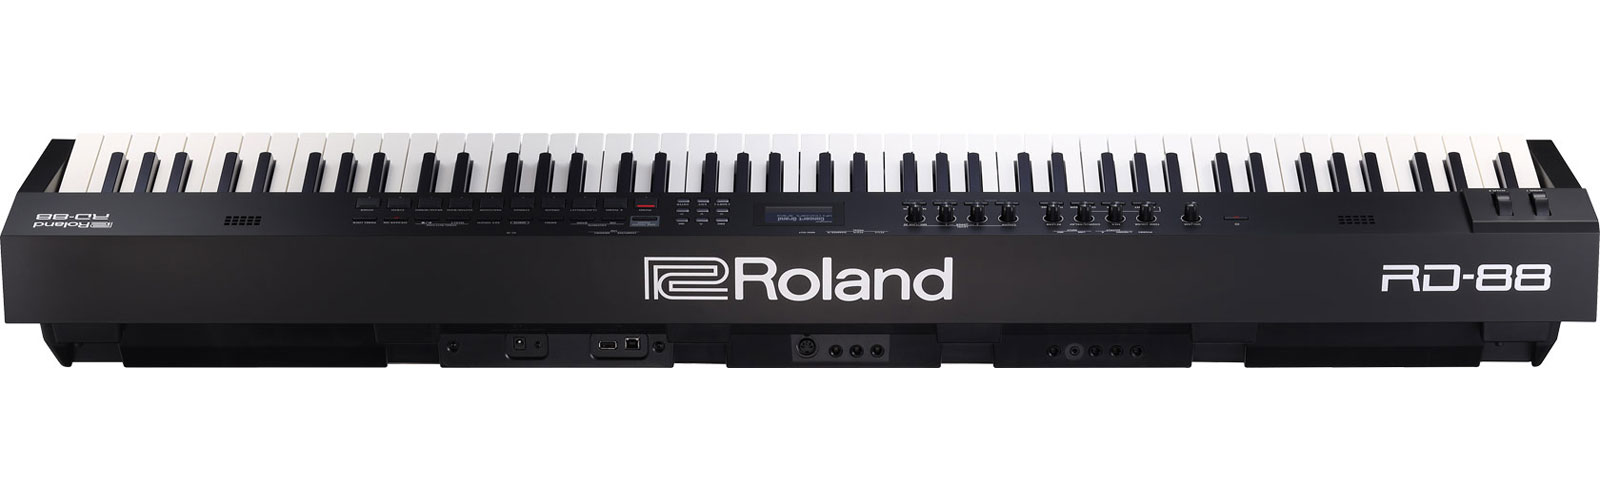 Roland Rd-88 - Stagepiano - Variation 4